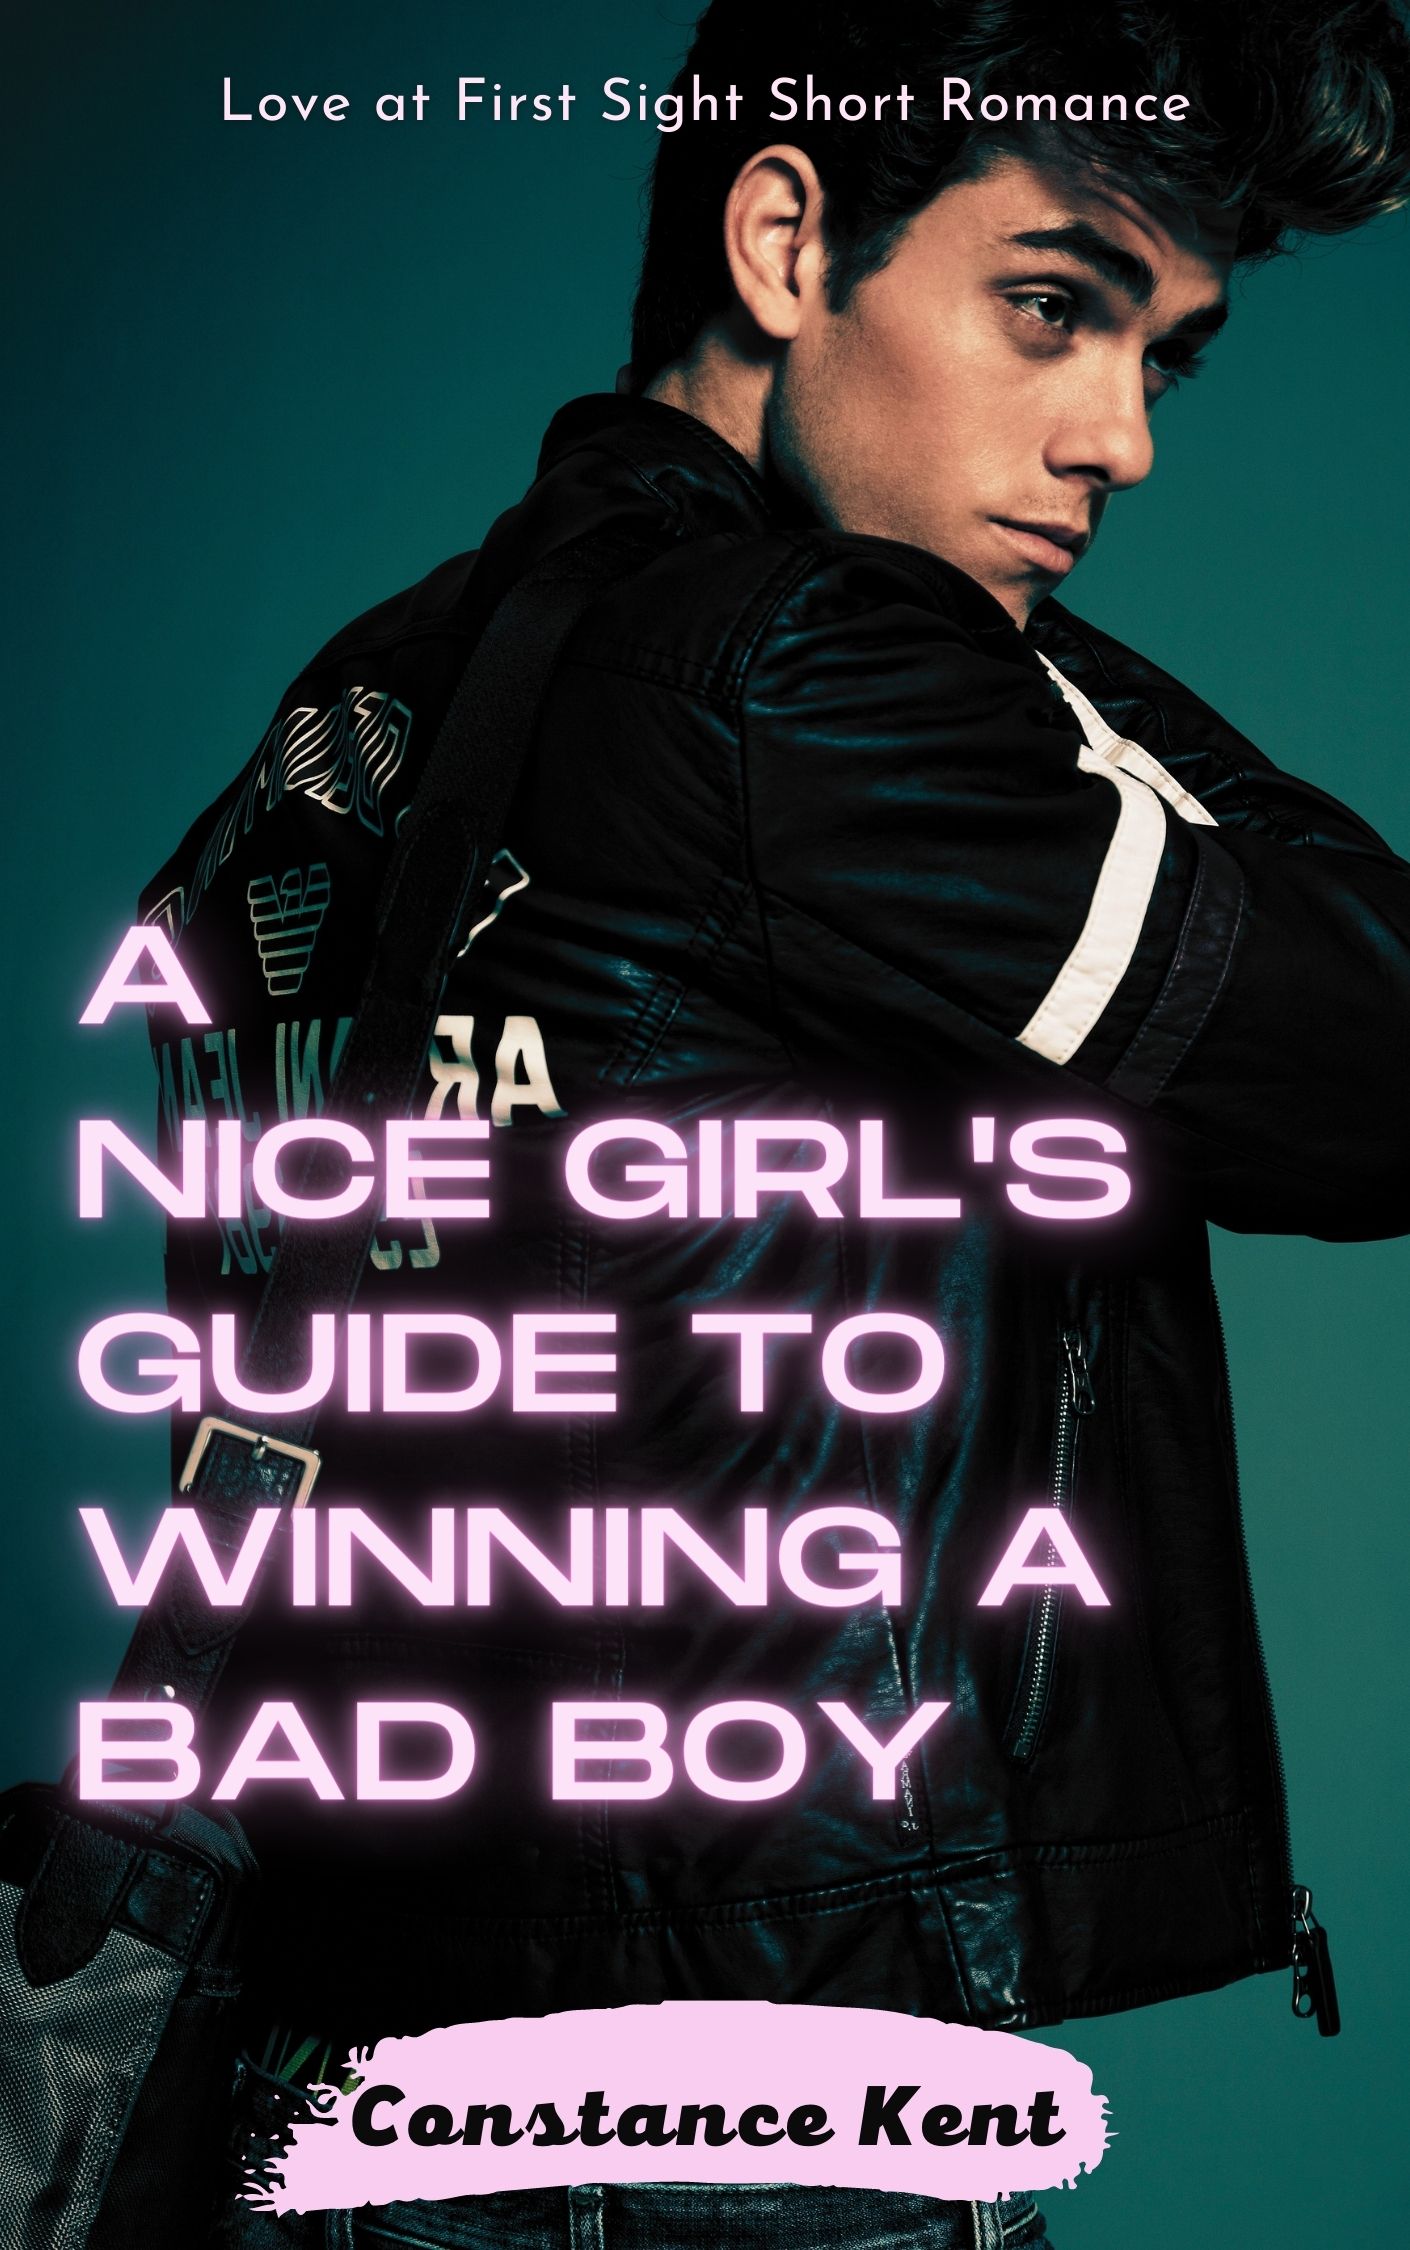 A Nice Girl's Guide to Winning a Bad Boy short romance